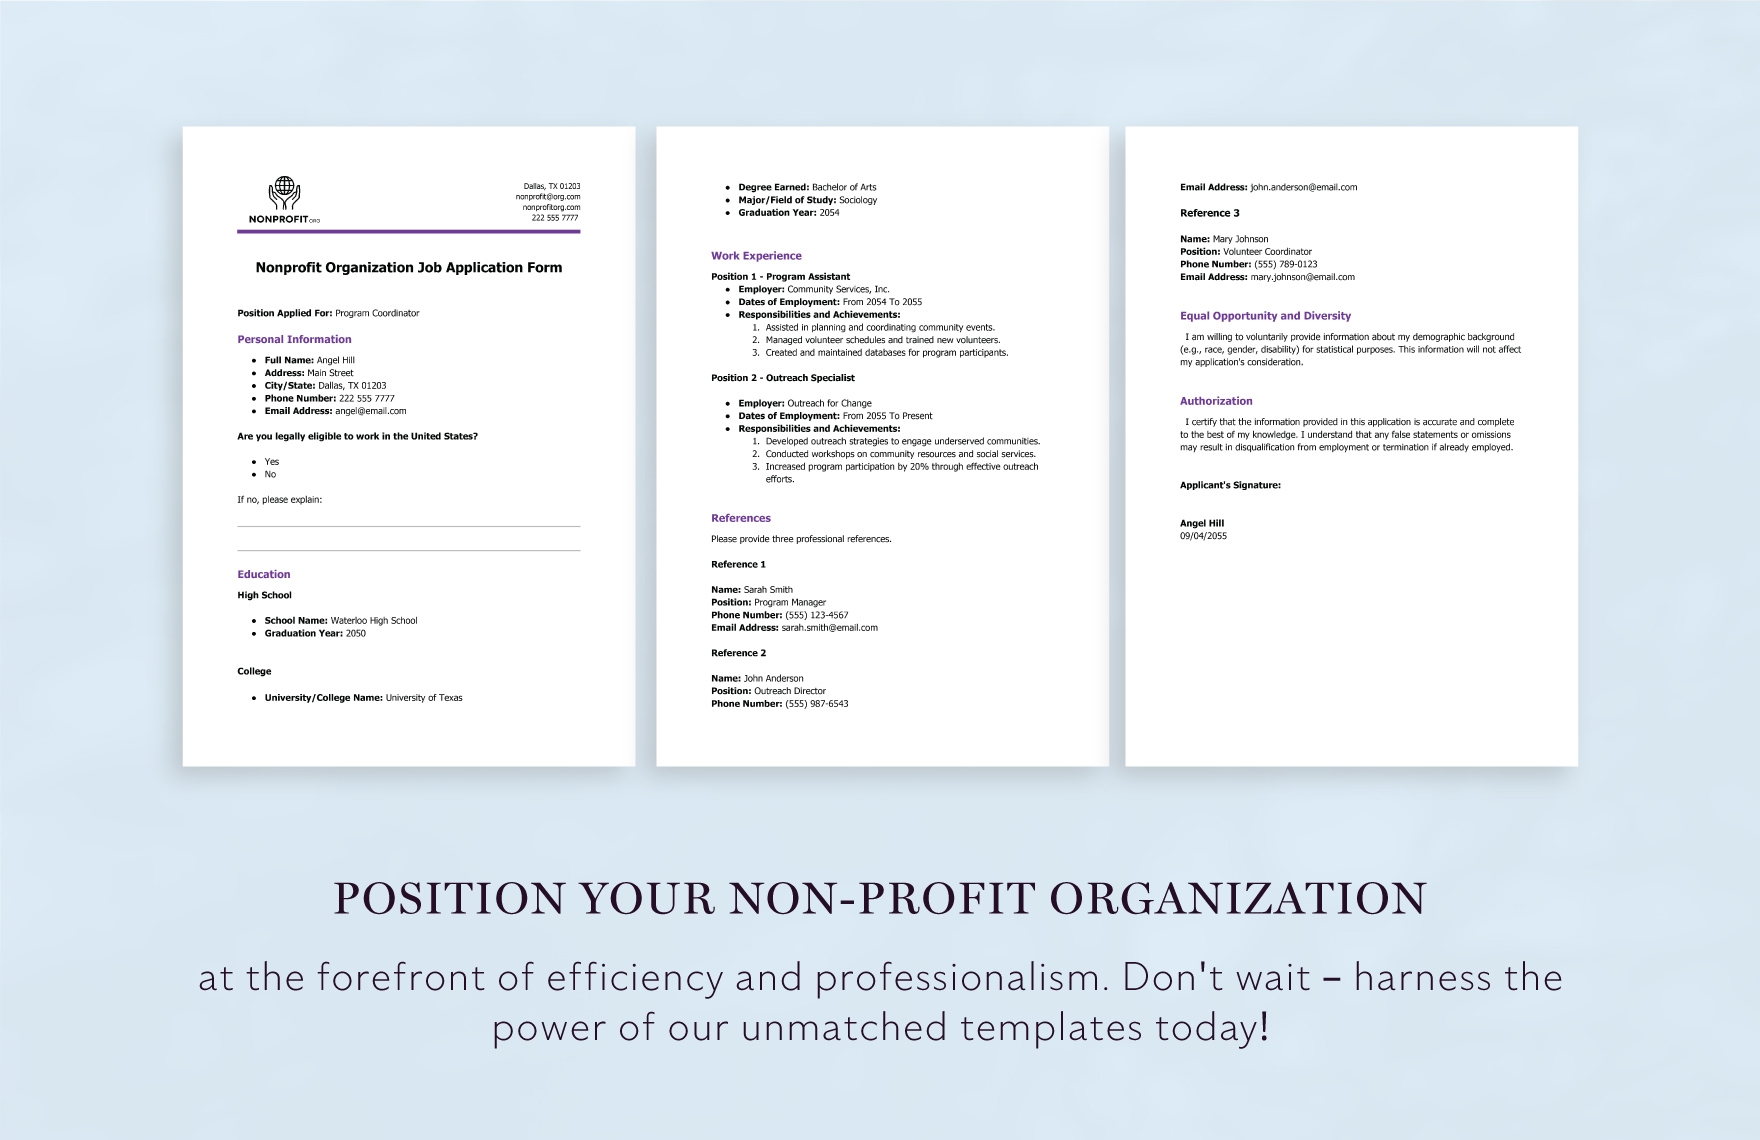 Nonprofit Organization Job Application Form Template